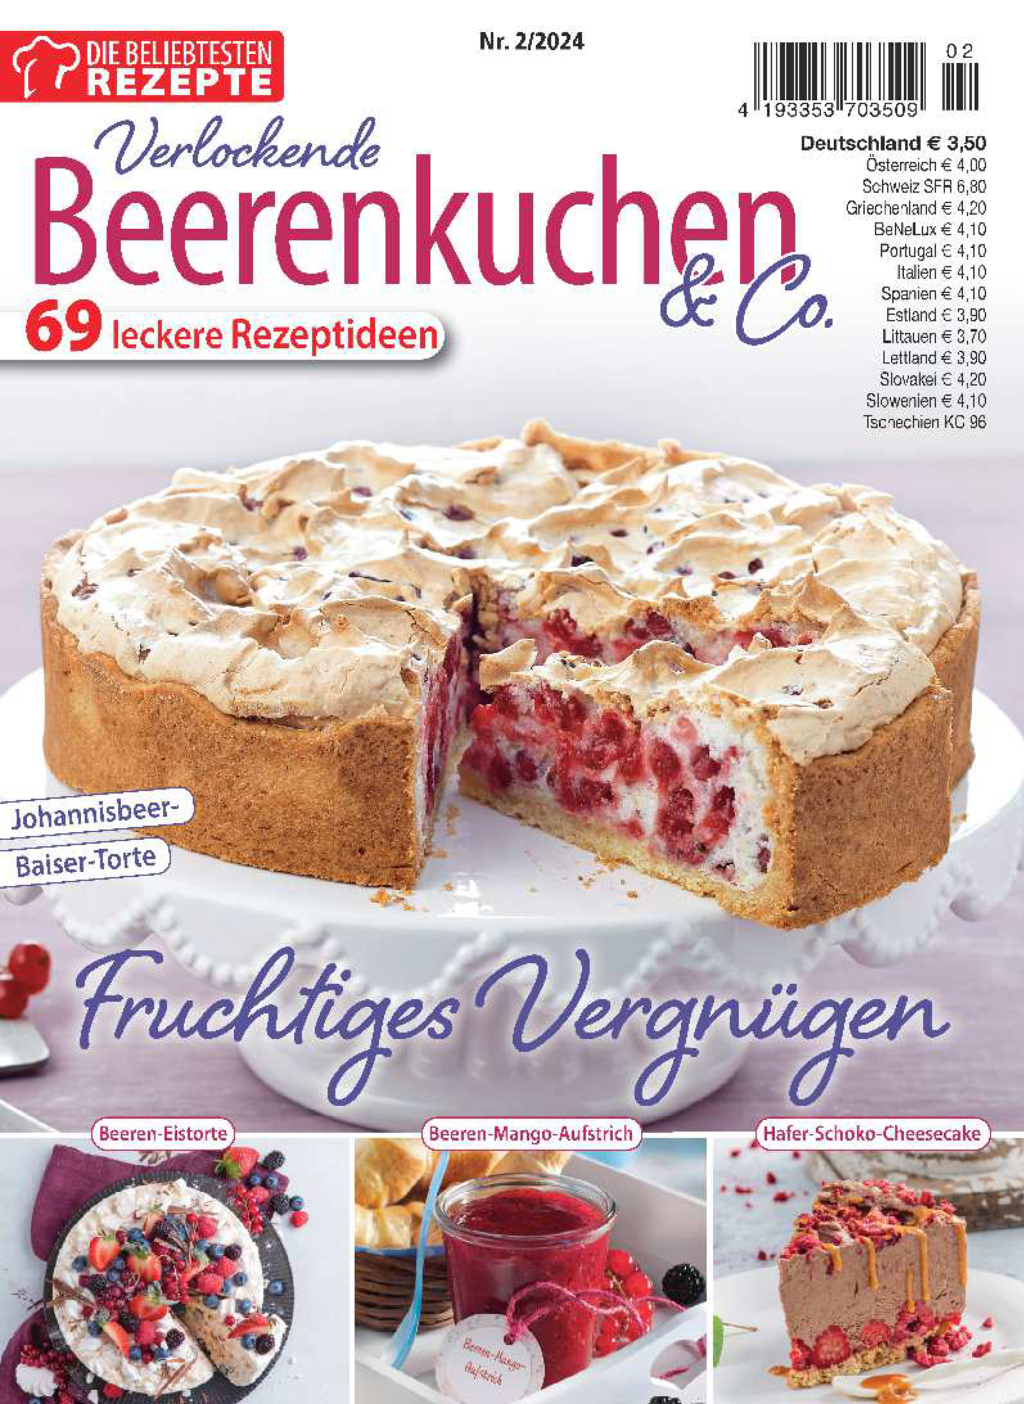 E-Paper: Die beliebtesten Rezepte 2/2024 - Beerenkuchen & Co.